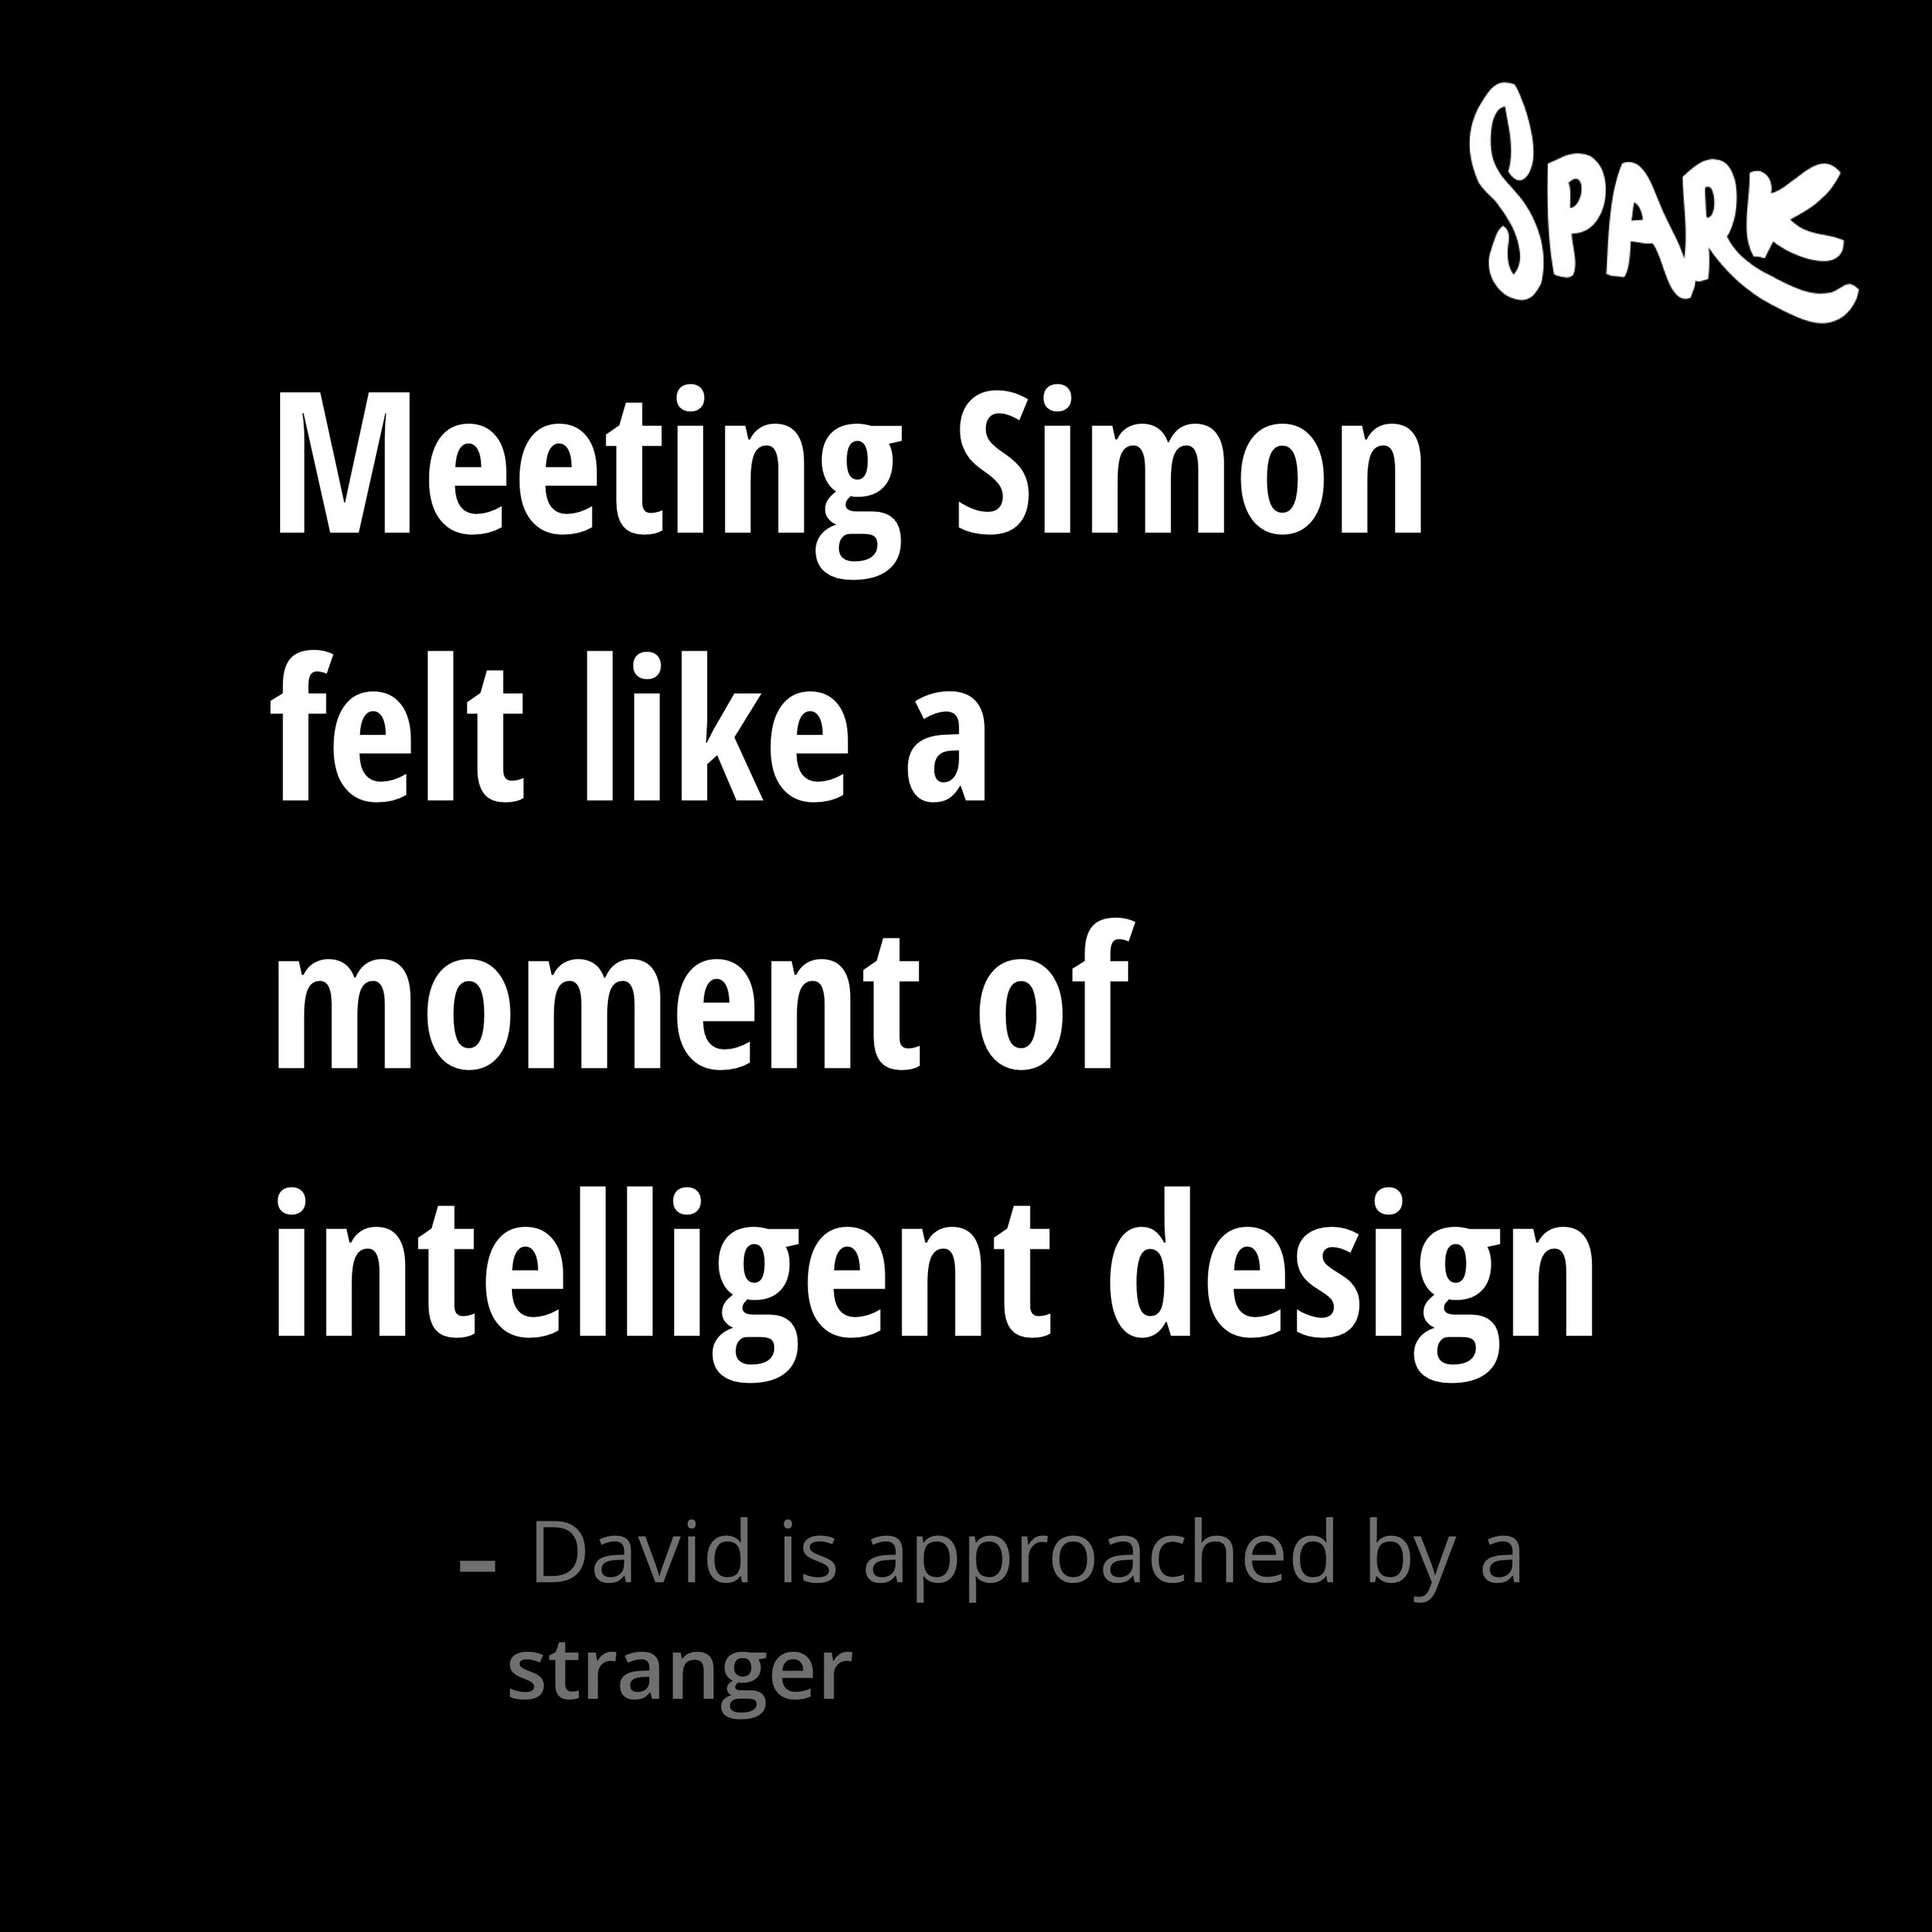 Intelligent Design - David